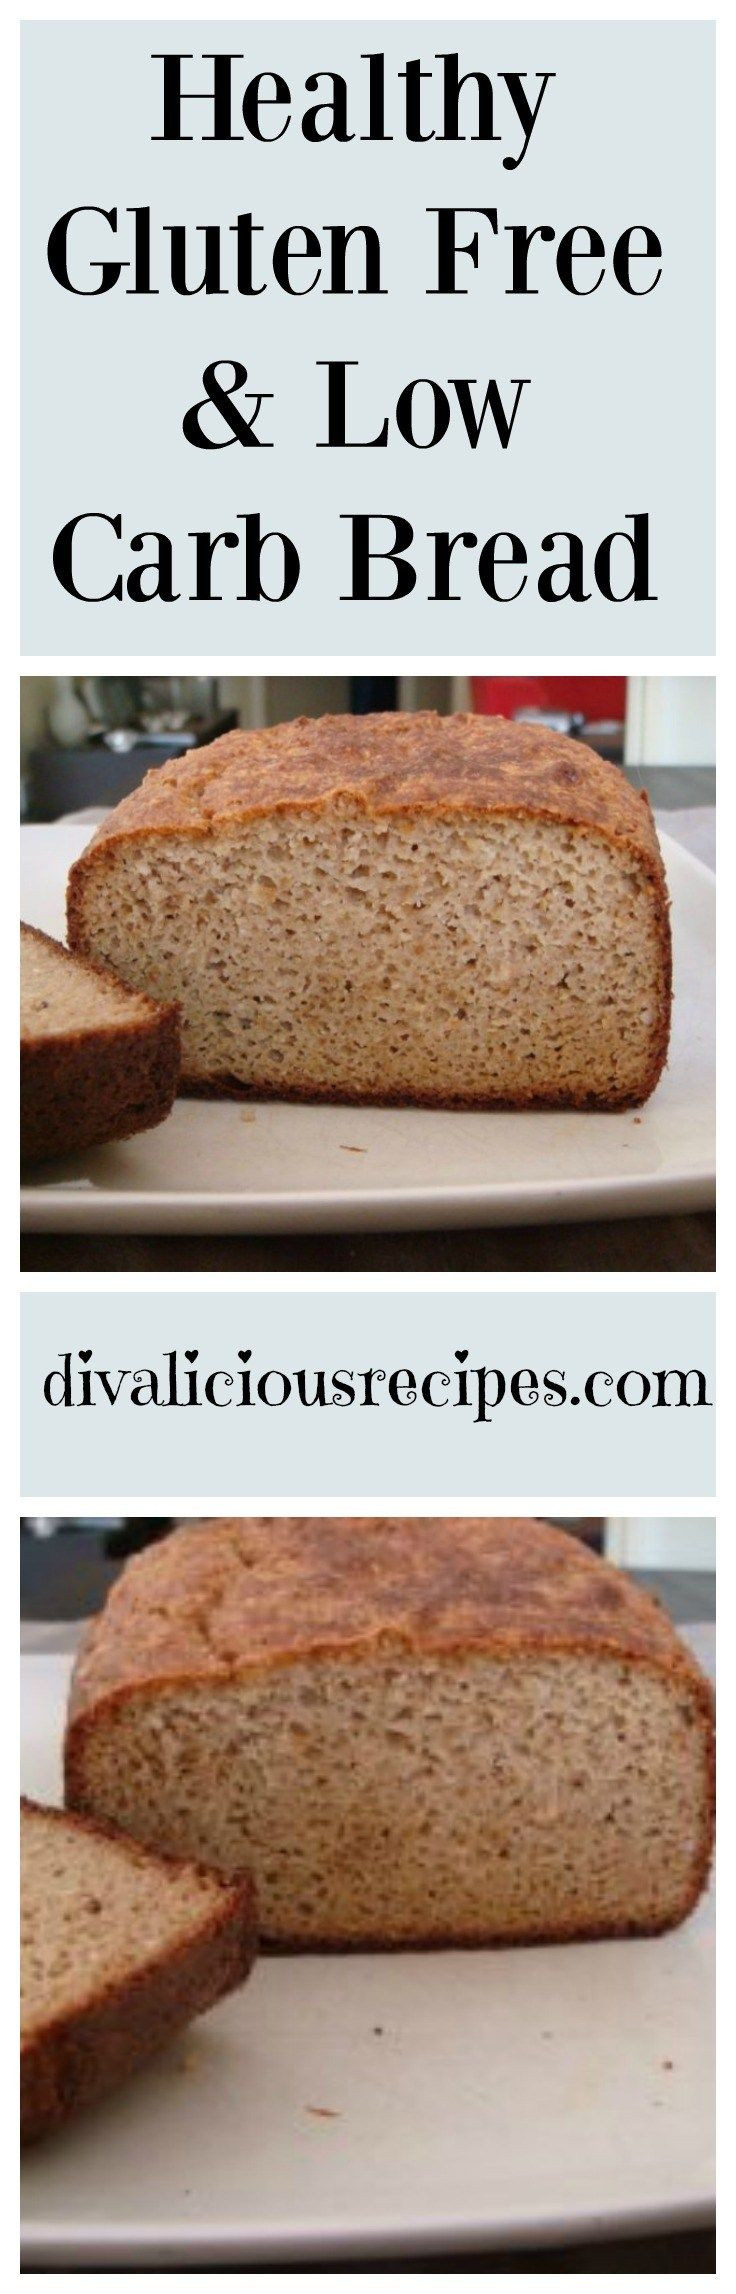 Healthy Low Carb Bread
 Healthy Gluten Free & Low Carb Bread